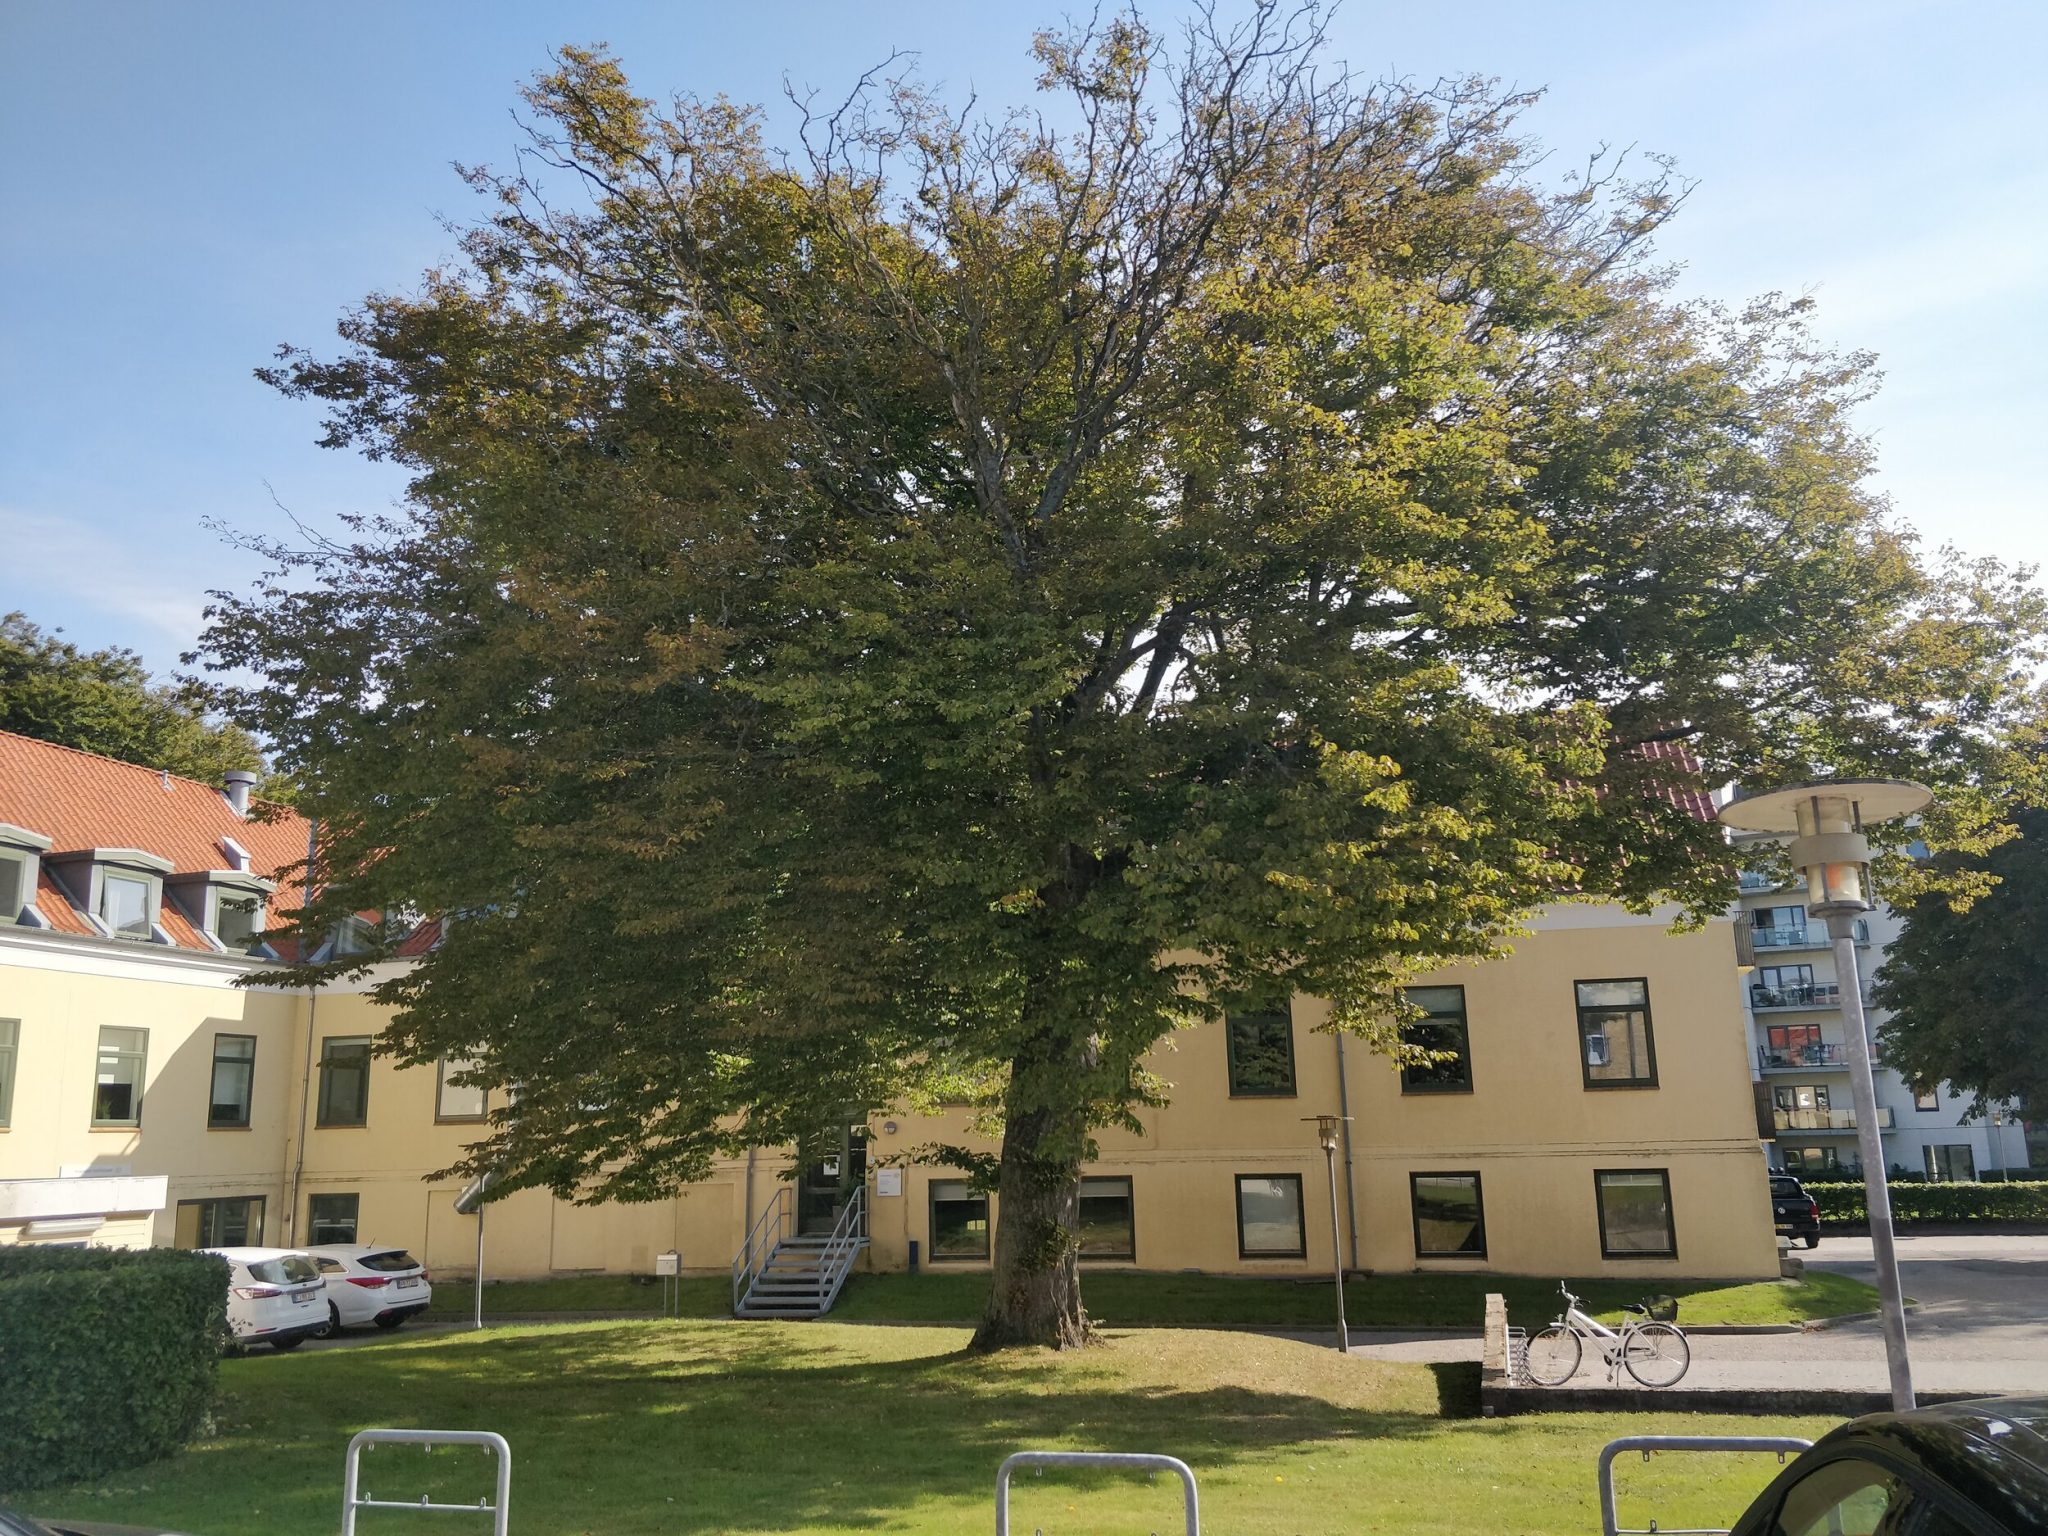 træ foran kastaniegården